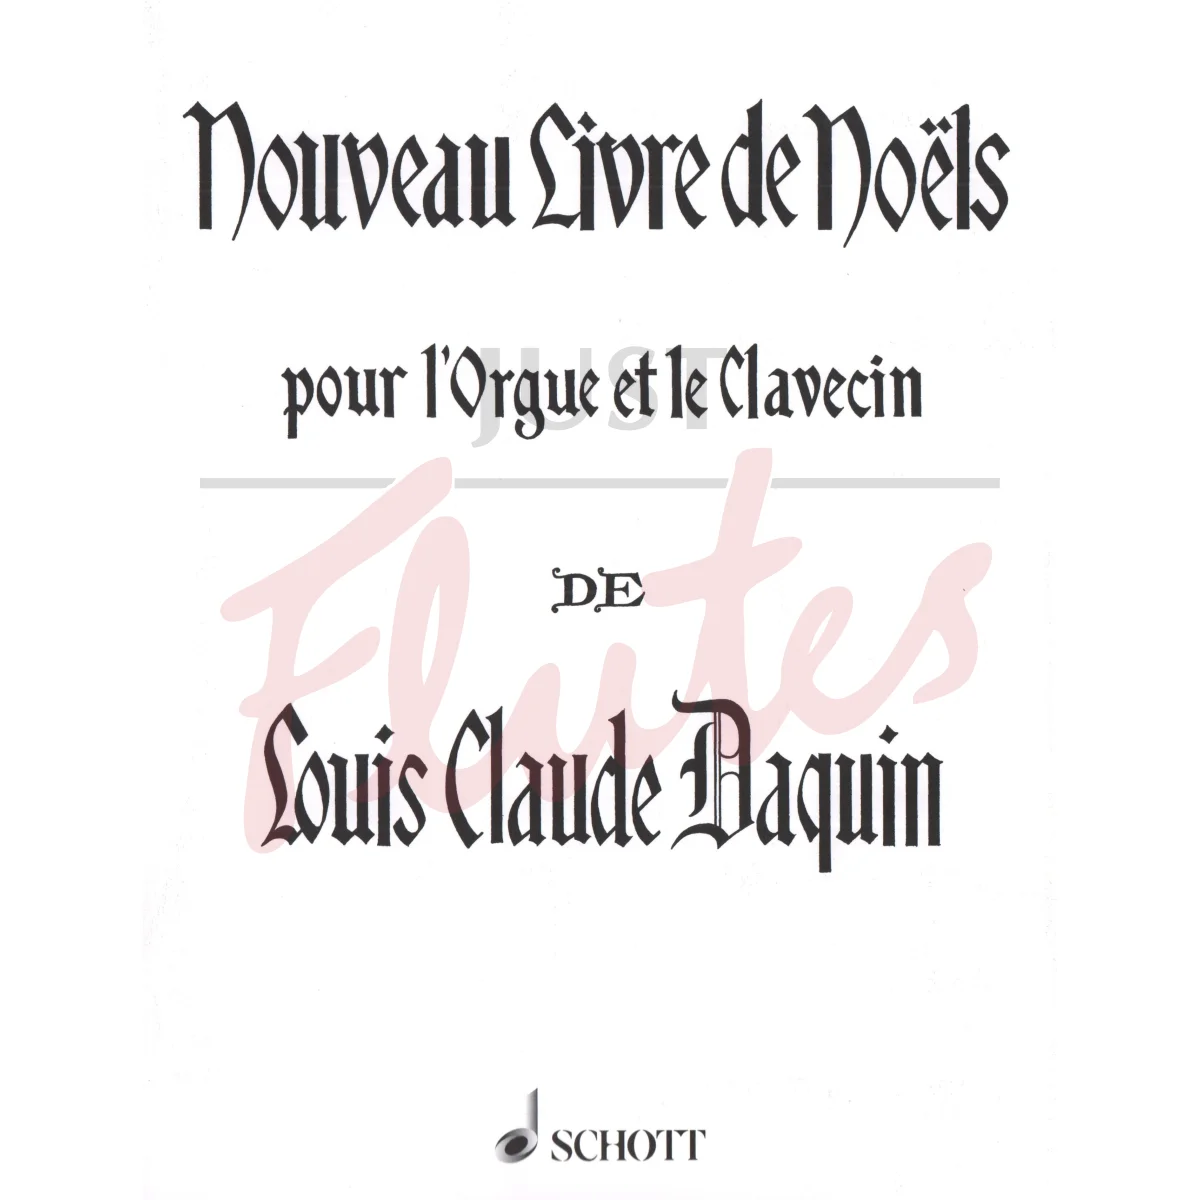 Nouveau Livre de Noëls (New Christmas Book) for Organ and Harpsichord